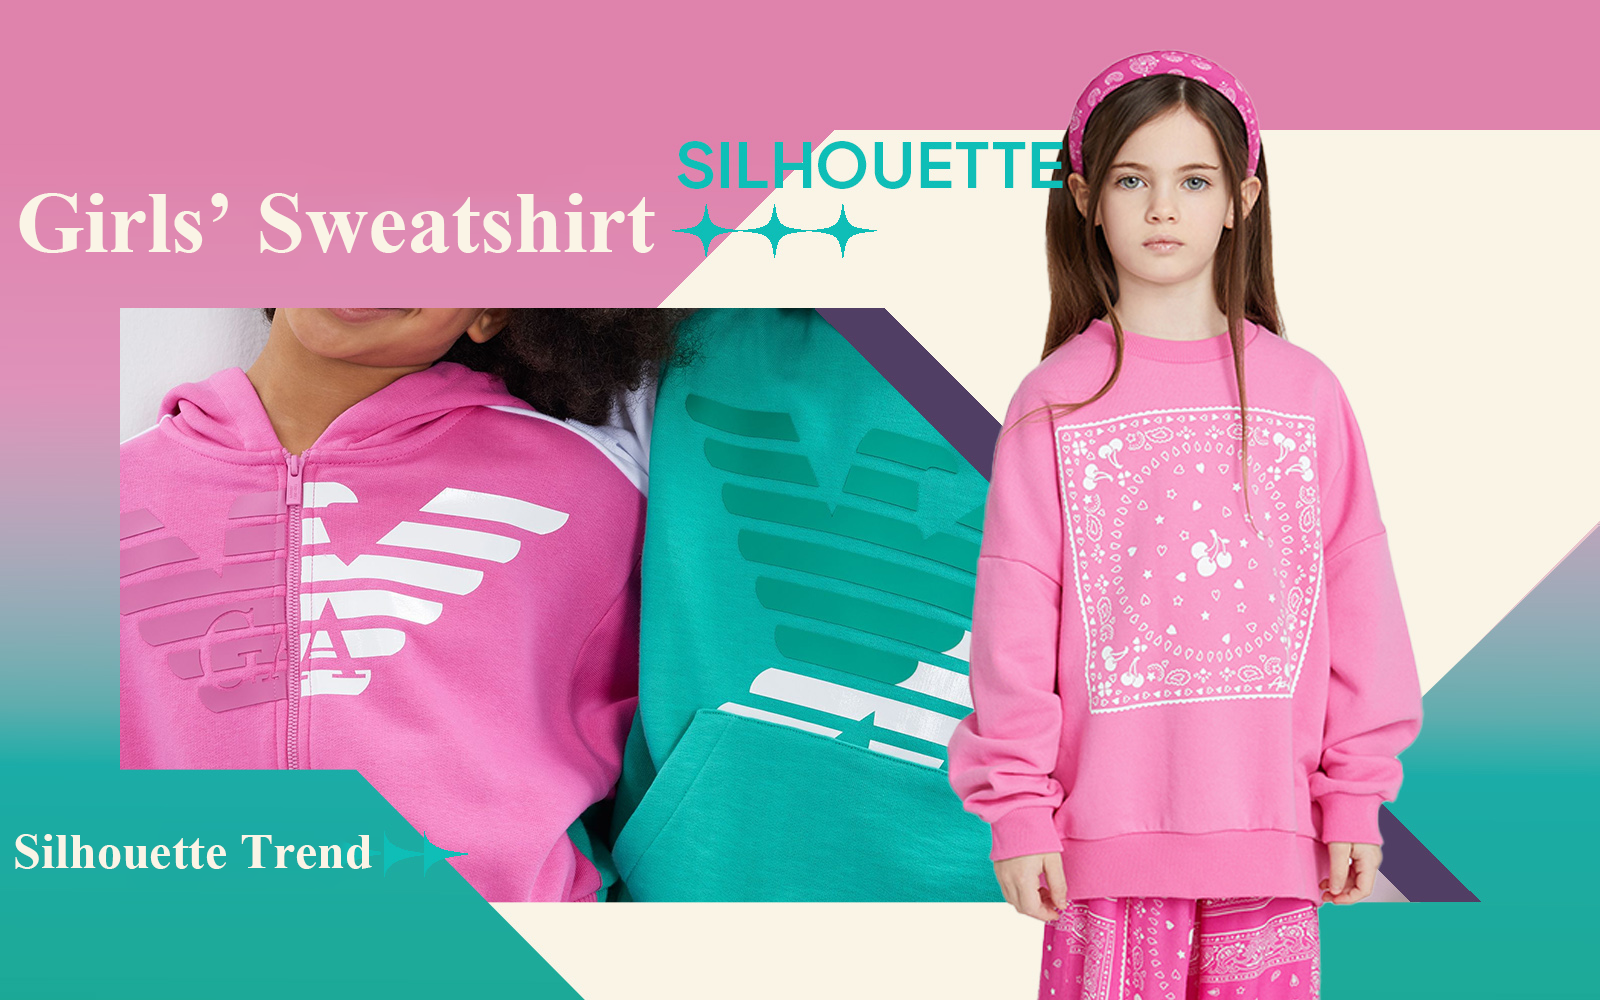 The Silhouette Trend for Girls' Sweatshirt